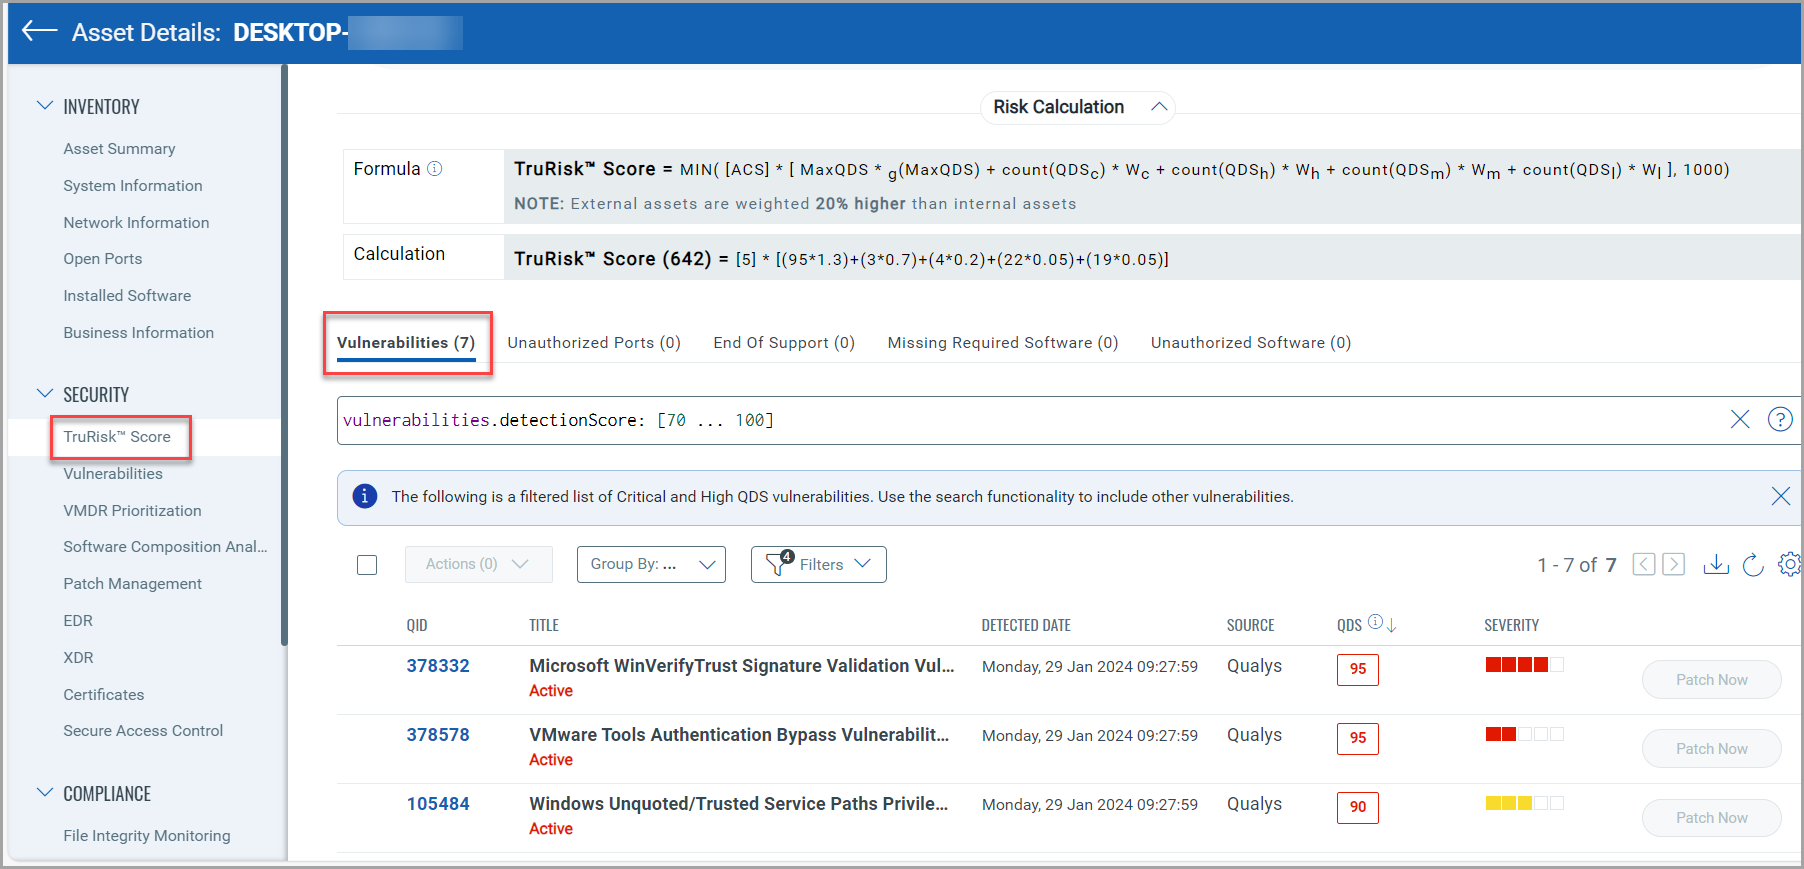 TruRisk score details about vulnerbailities in Asset Details page.